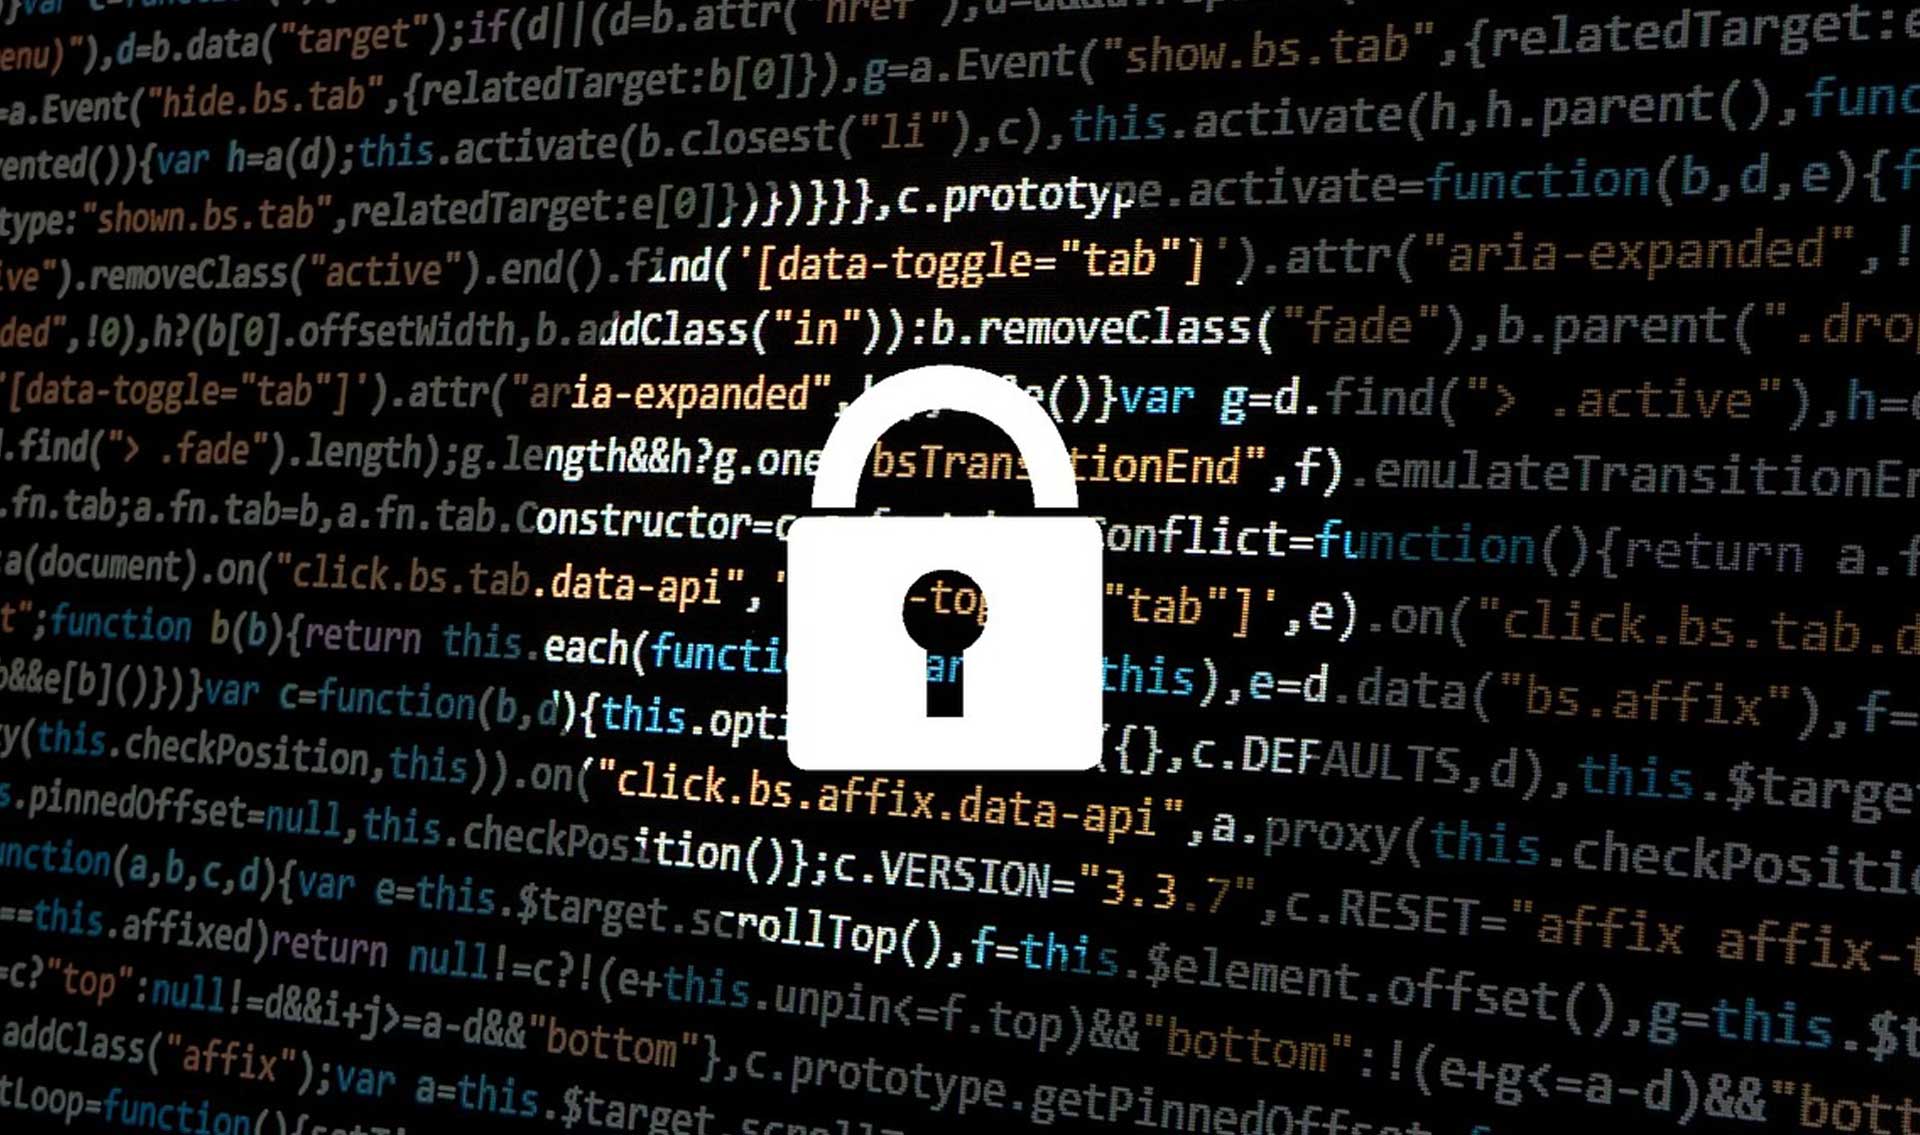 phishing protection against hacks